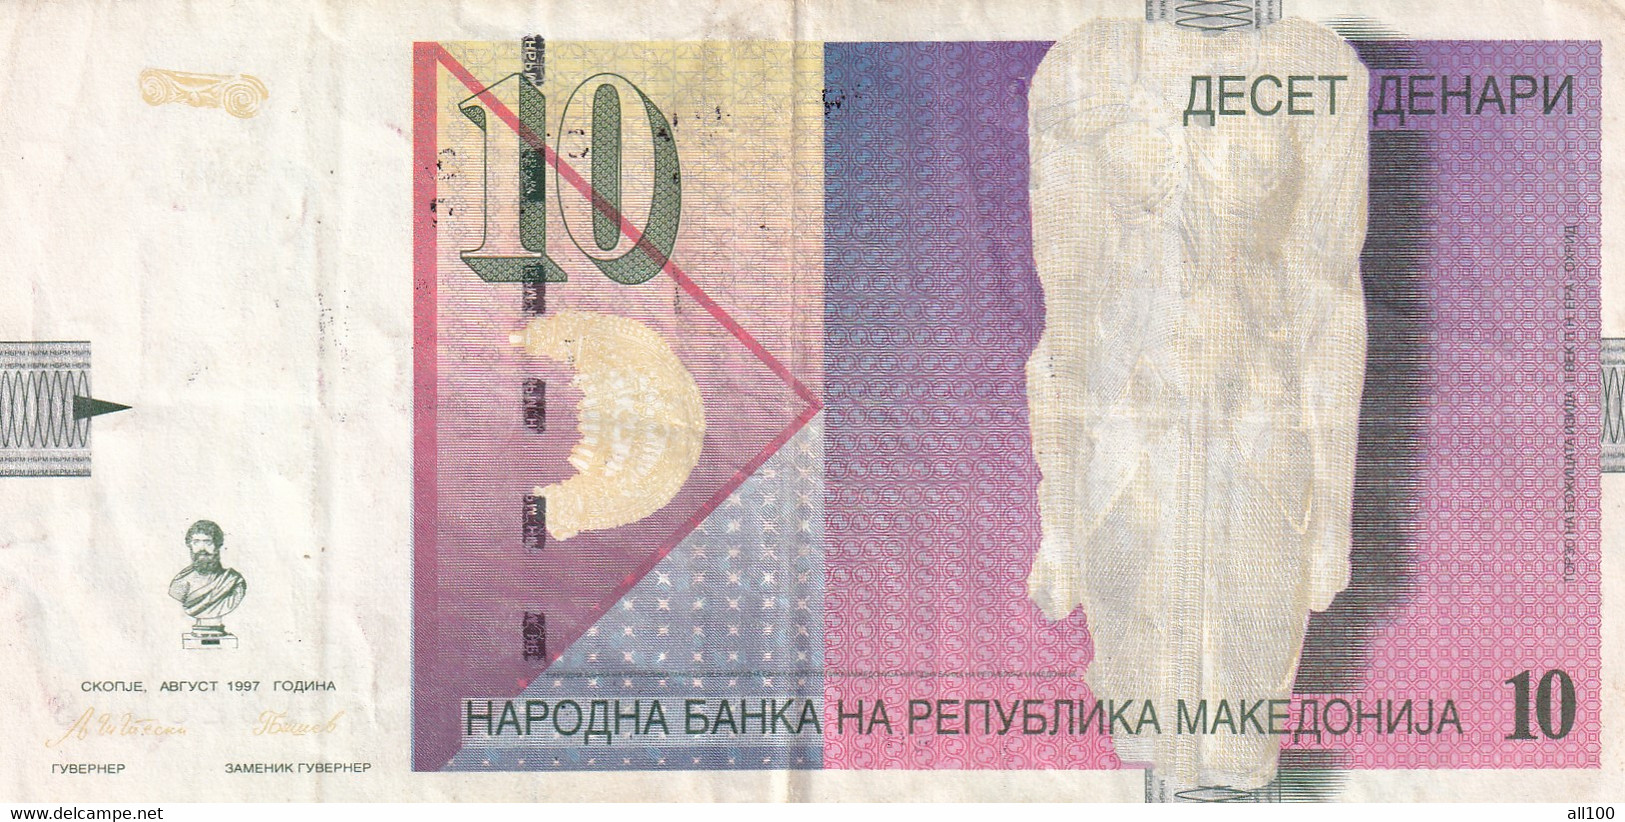 10 DENAR DECET DENARS TEN DENARS MACEDONIA 1997 NATIONAL BANK OF THE REPUBLIC OF MACEDONIA 626808 - Macedonia Del Norte